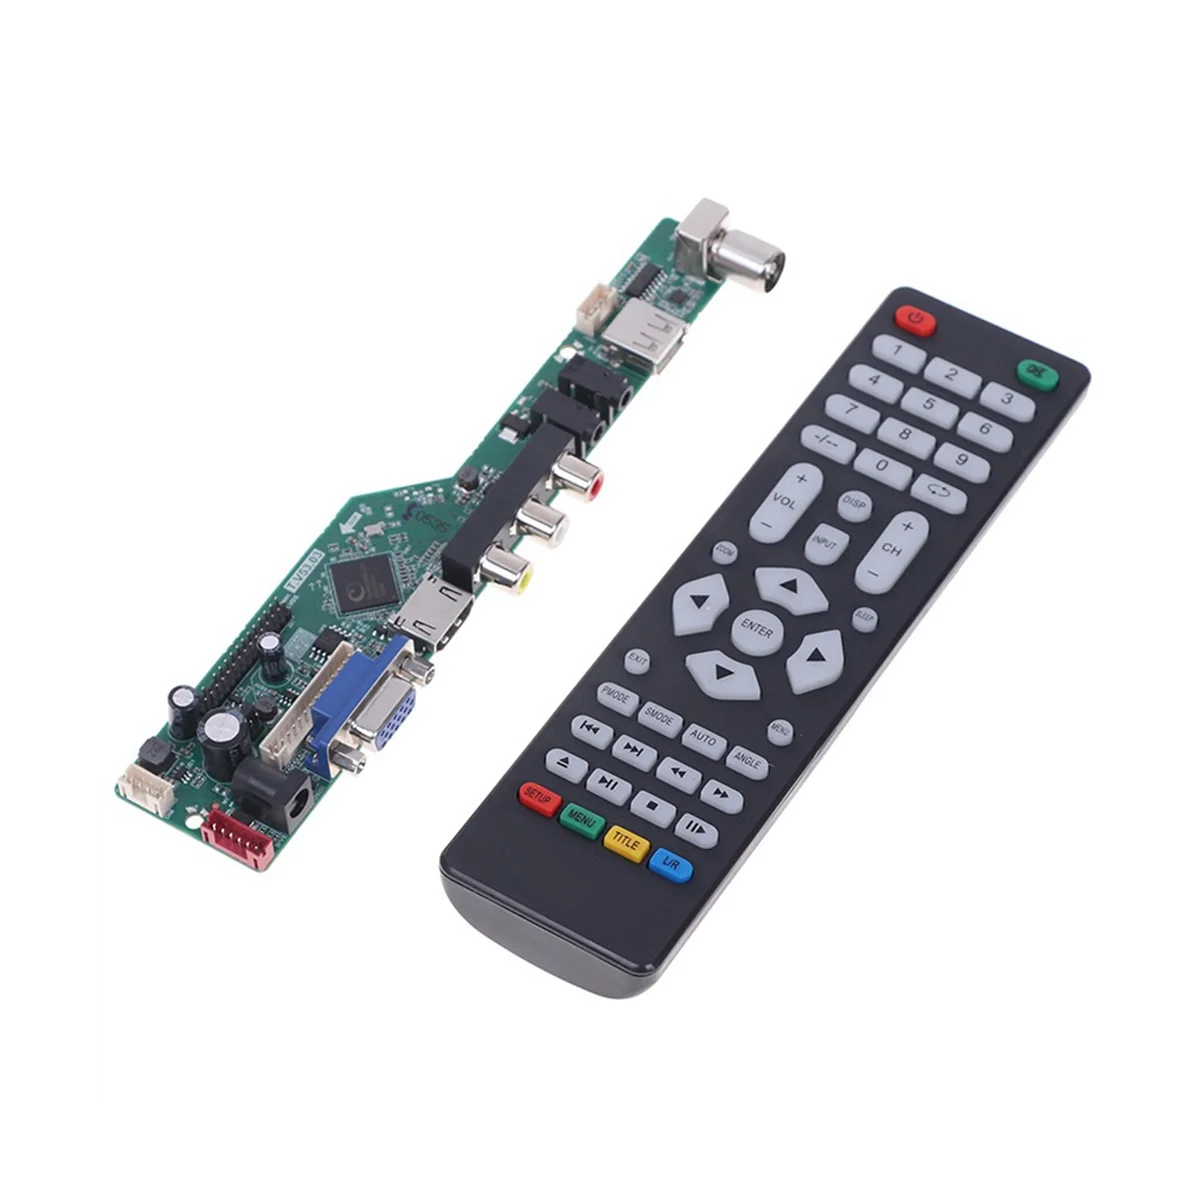 

High Quality T.V53.03 Universal LCD TV Controller Driver Board V53 Analog TV TV/AV/PC/HD/USB Media Motherboard C